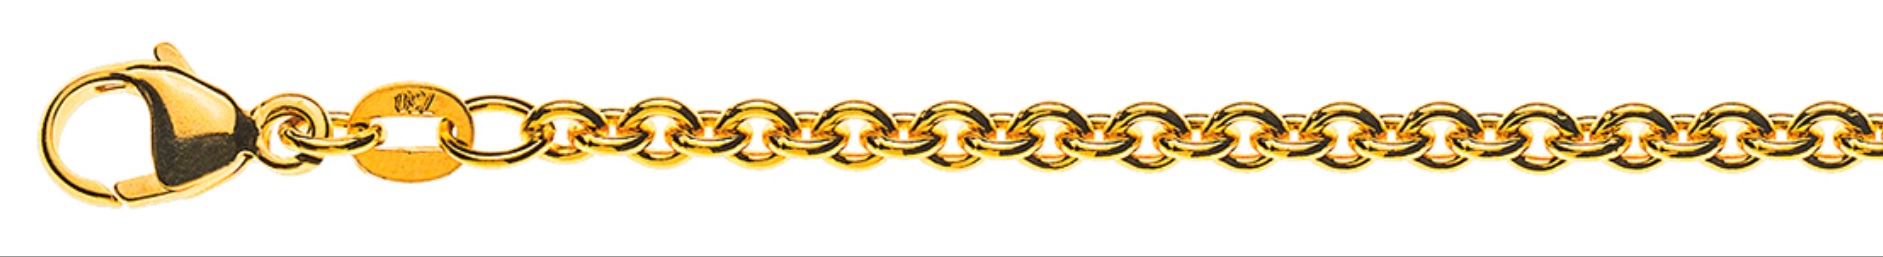 AURONOS Prestige Bracelet Round Anchor 18K Yellow Gold 19cm 3.1mm